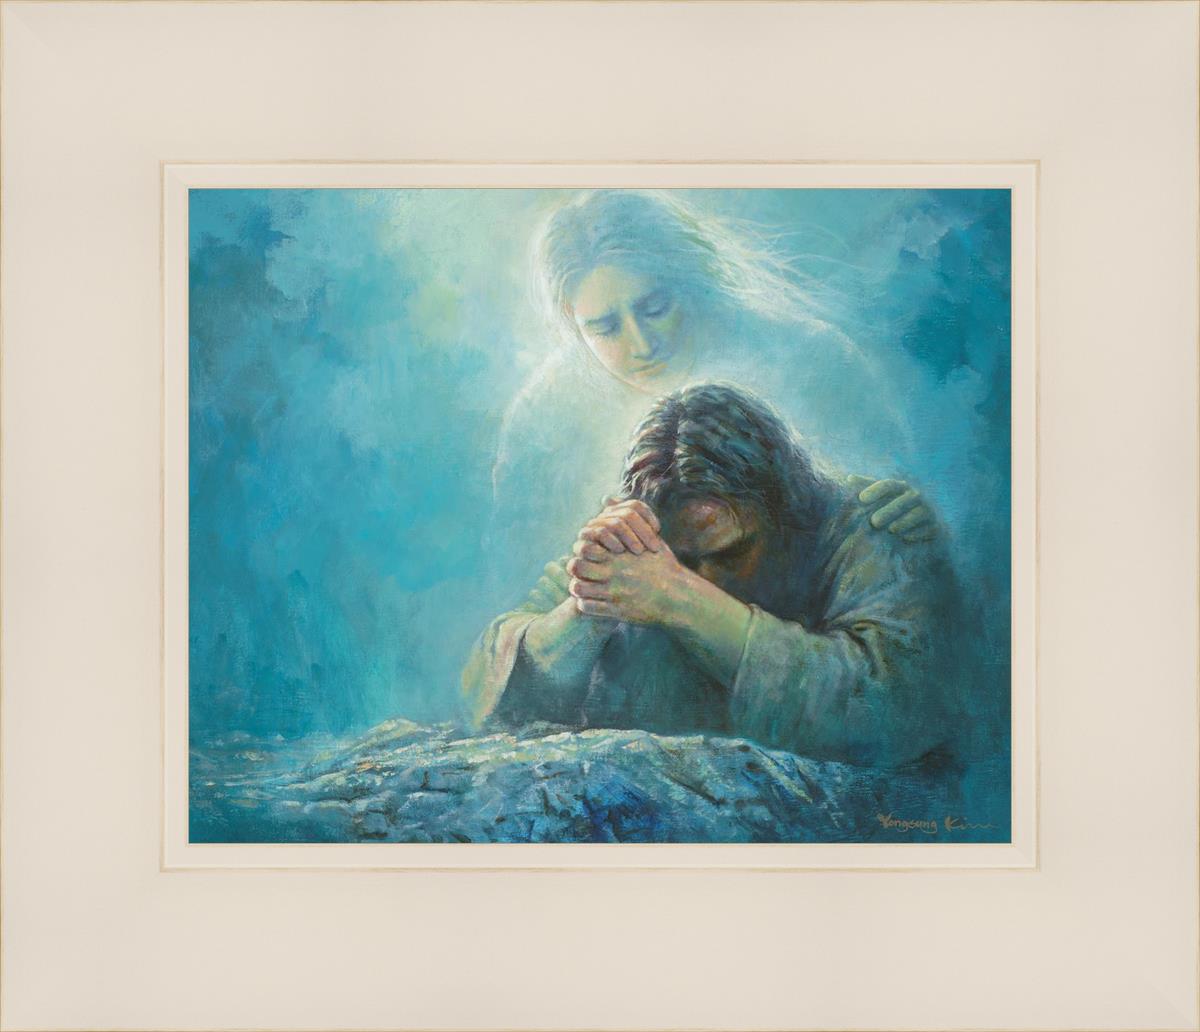 Gethsemane Prayer - Painting - Yongsung Kim | Havenlight ...